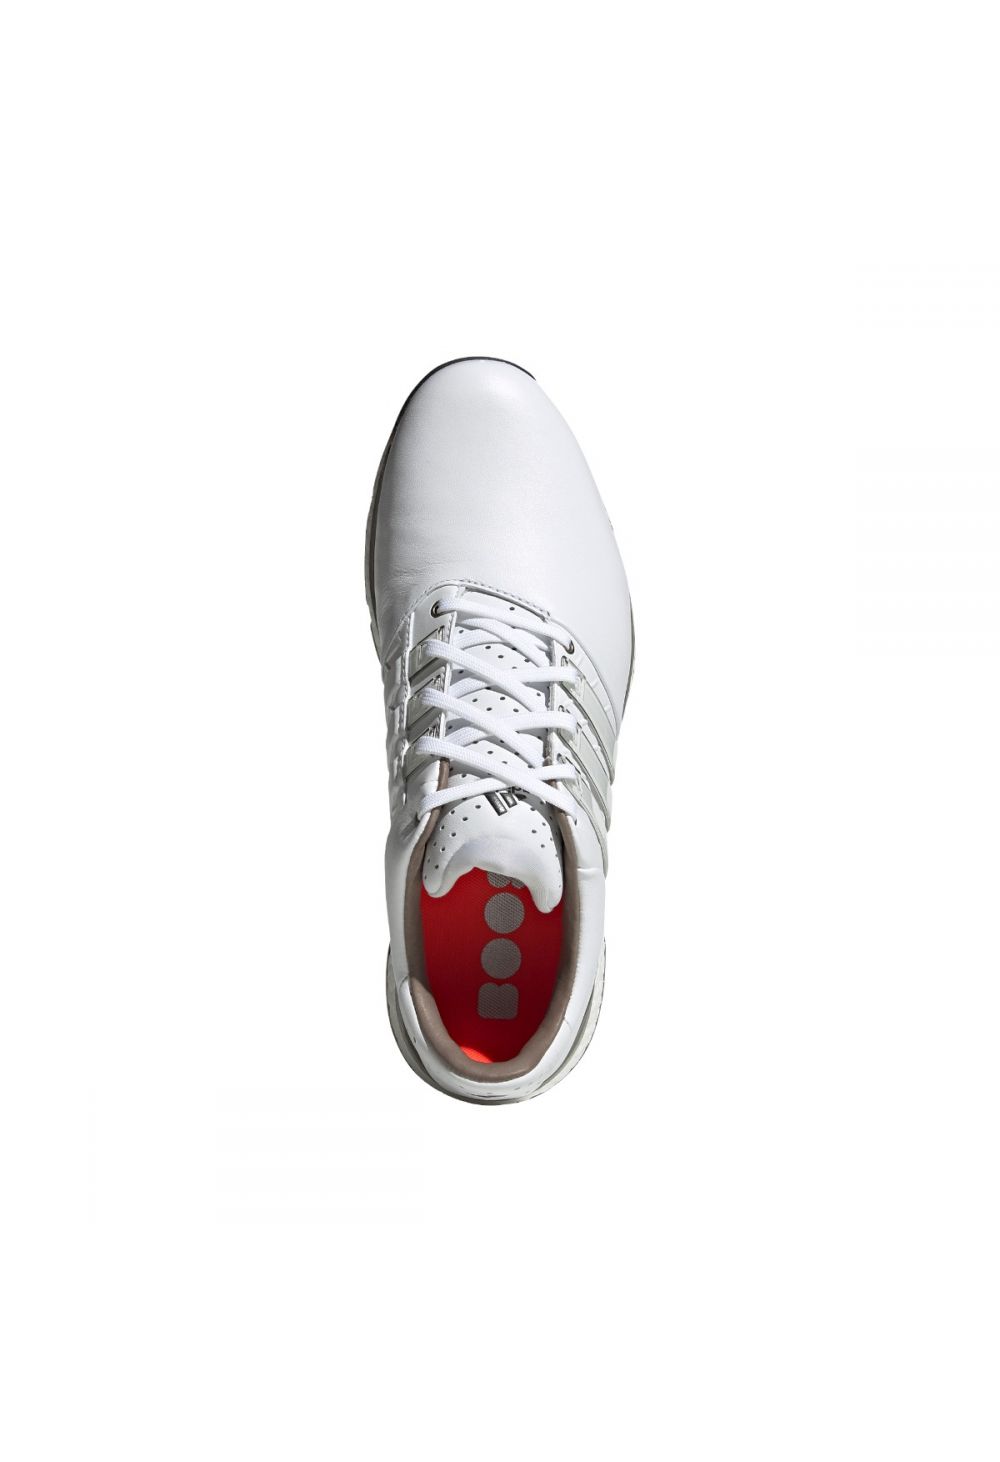 adidas Tour360 XT-SL II Golf Shoes EG4872